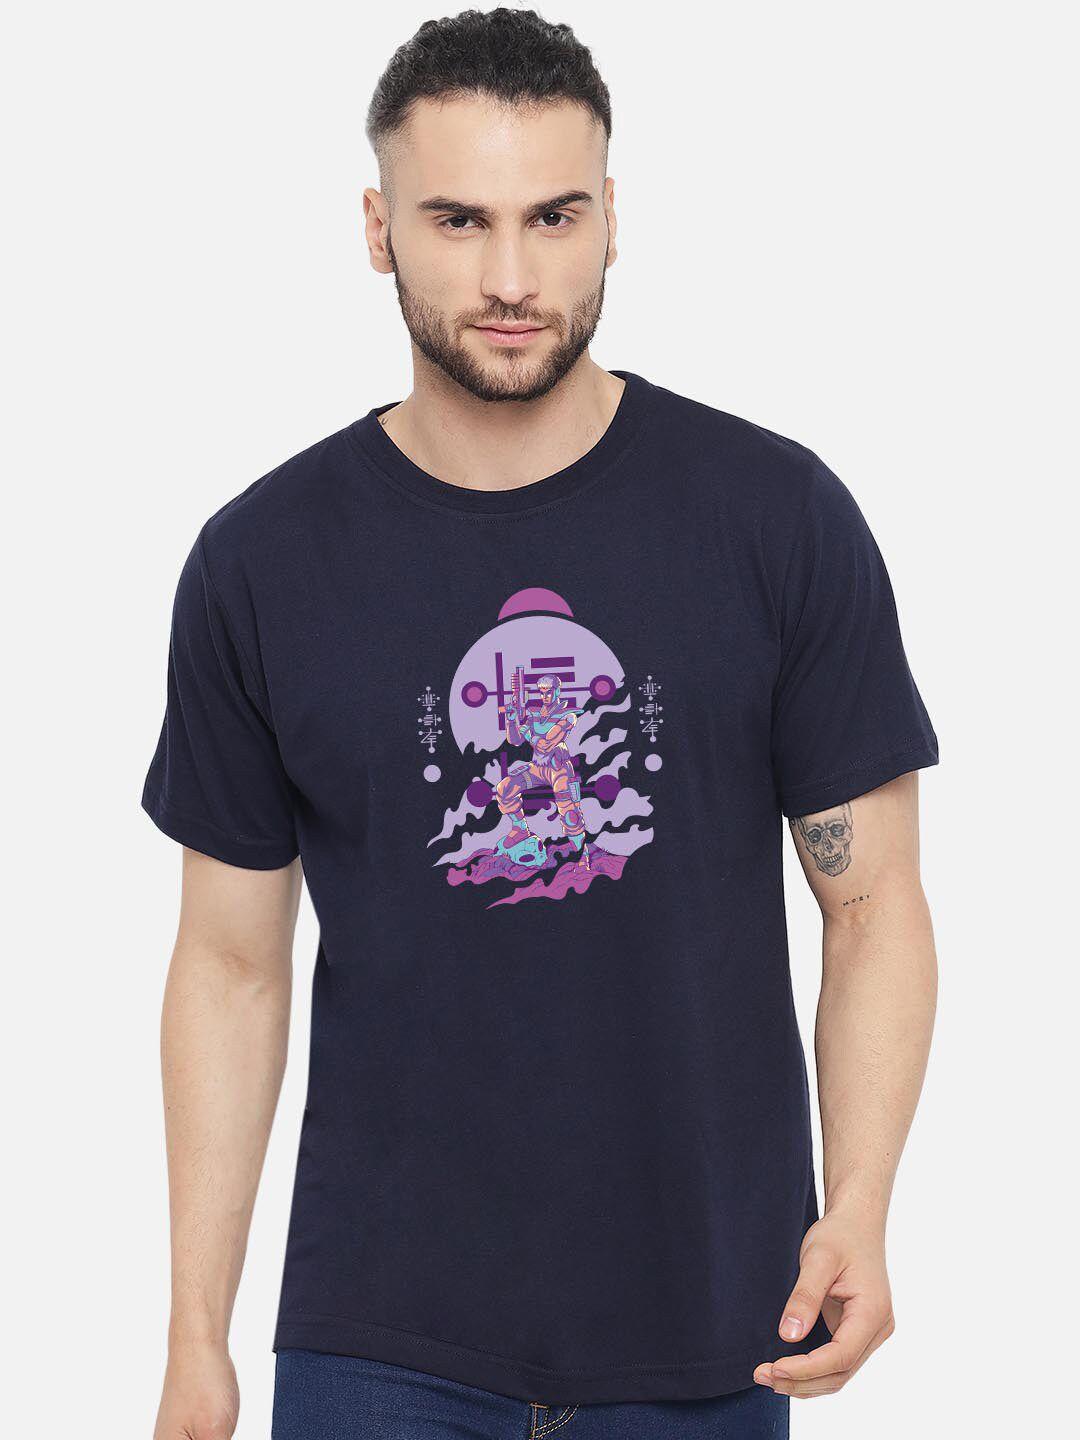 fflirtygo men navy blue & purple printed t-shirt